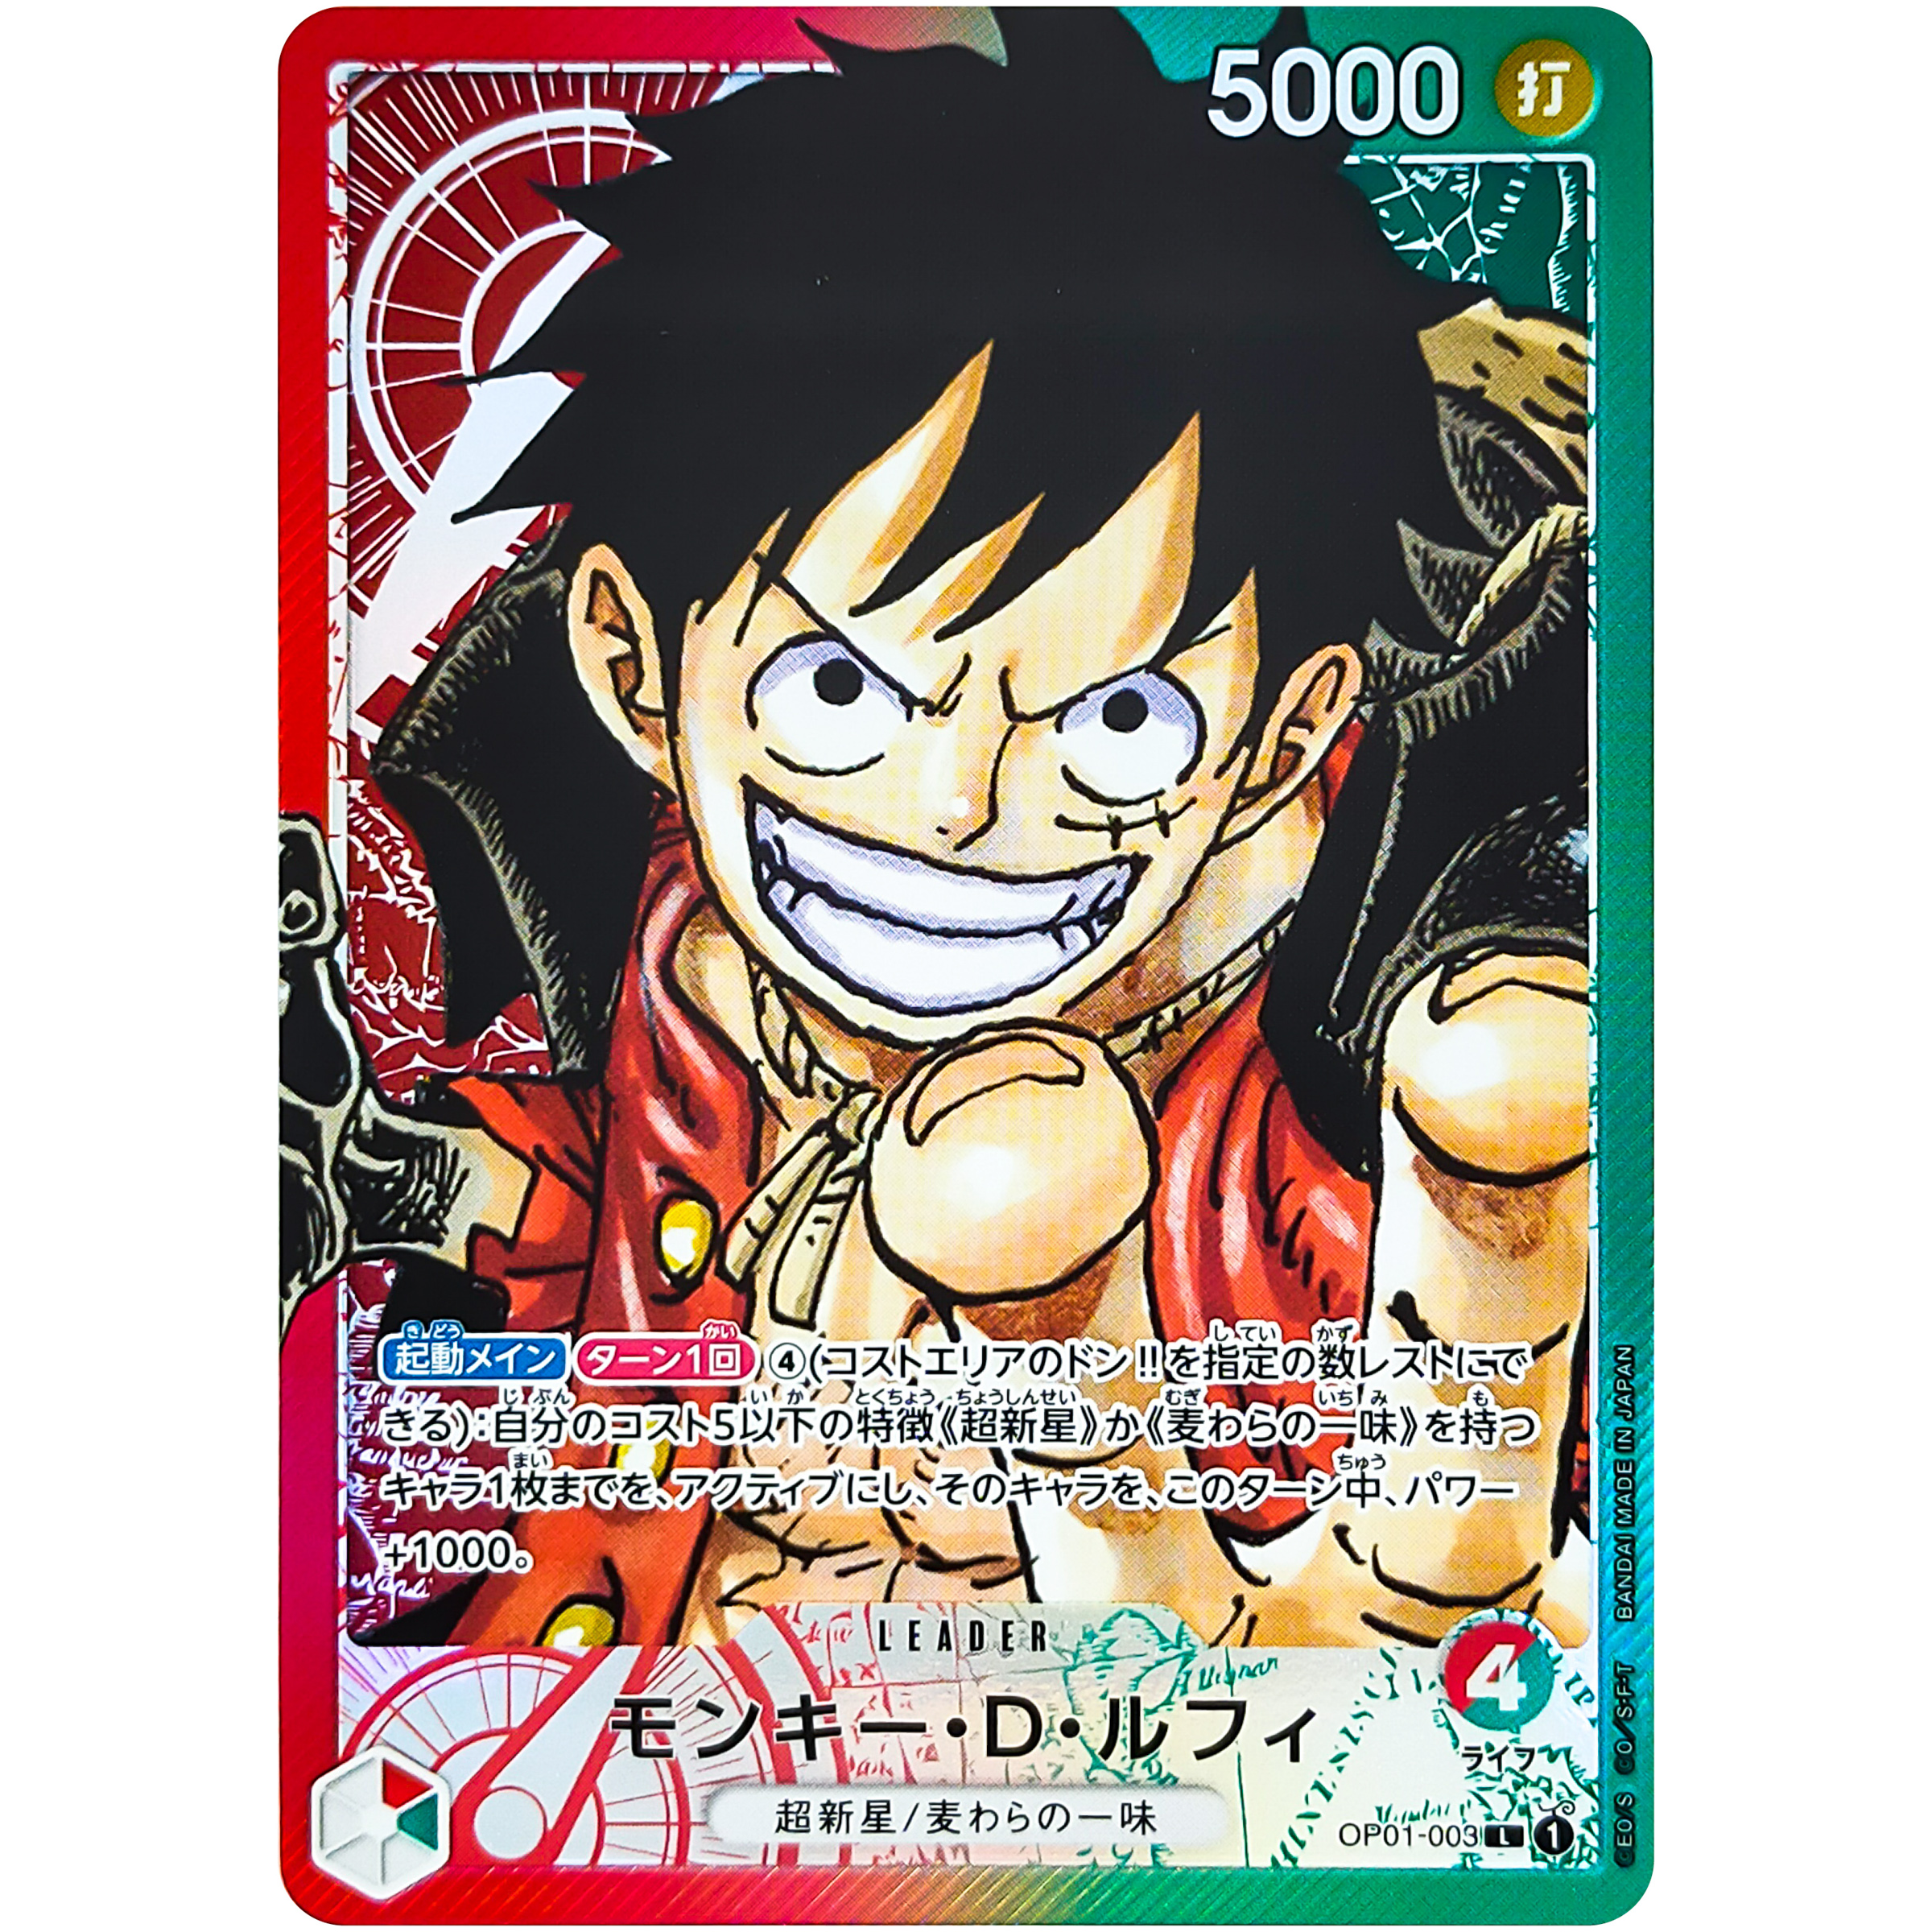 Monkey D. Luffy Art - One Piece: Romance Dawn Art Gallery